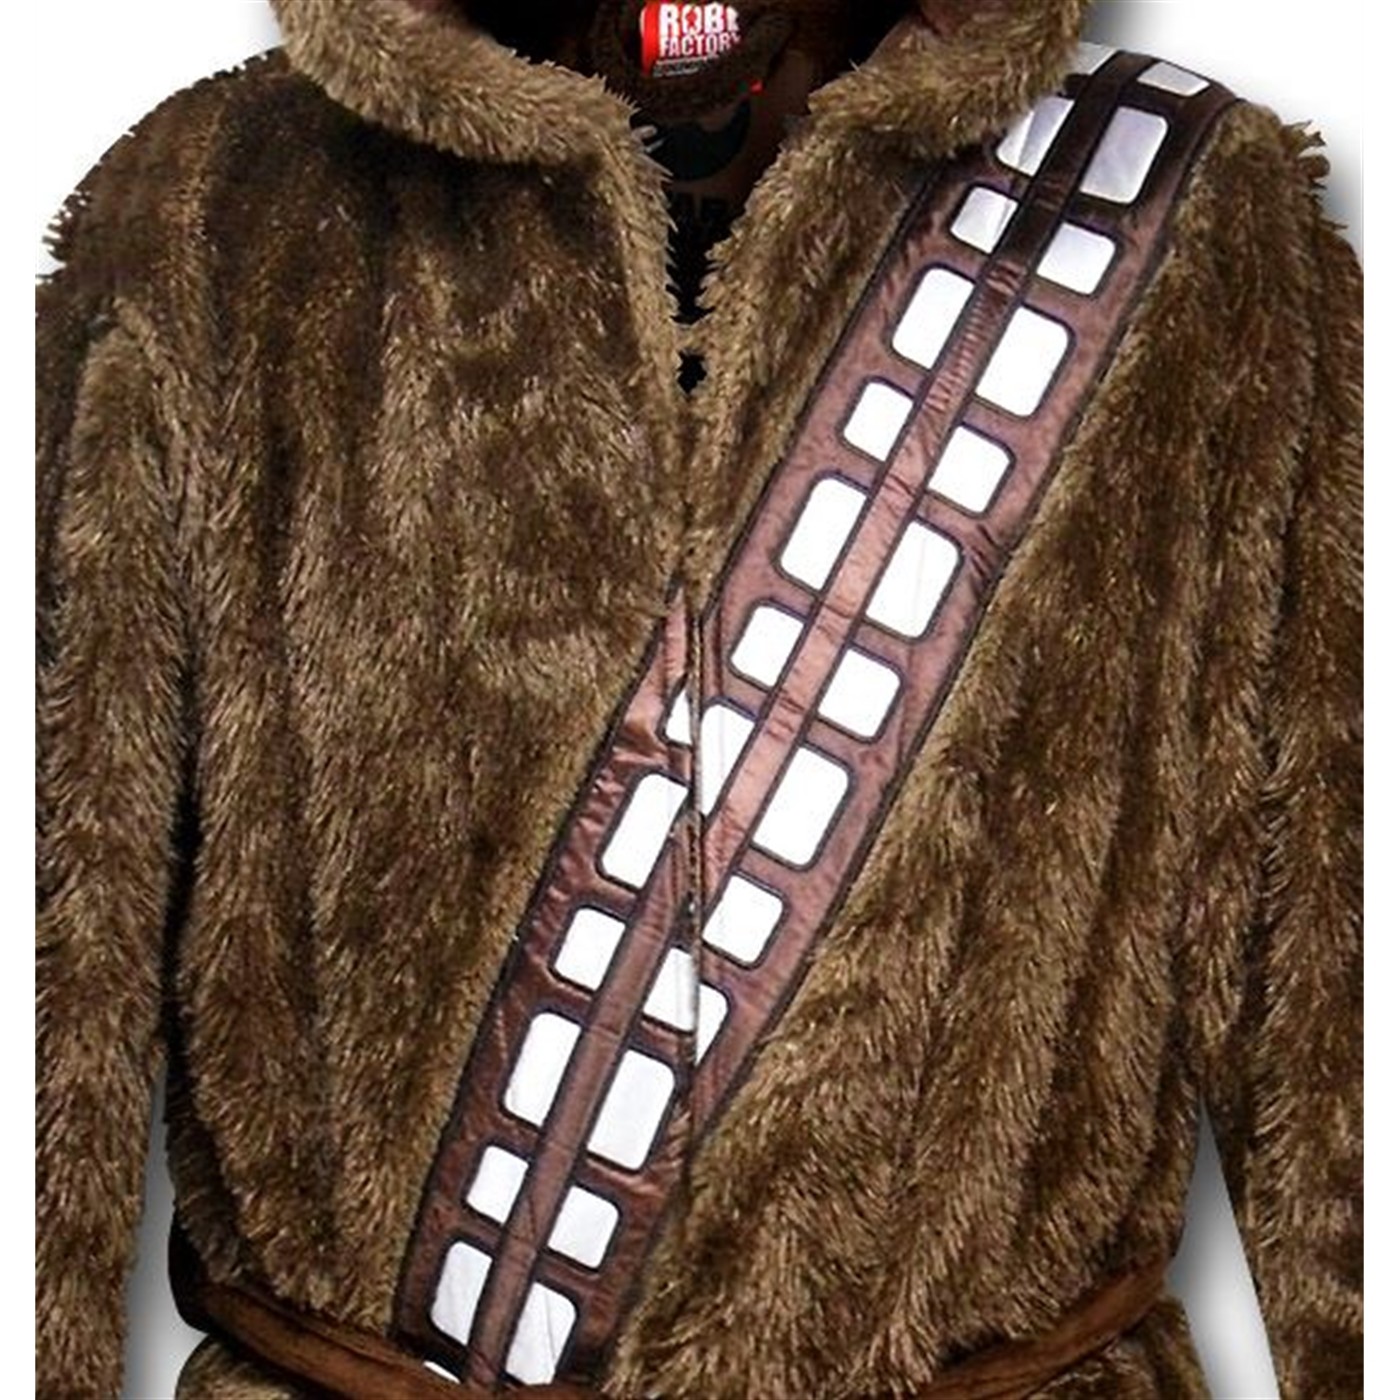 Star Wars Chewbacca Robe- OSFA